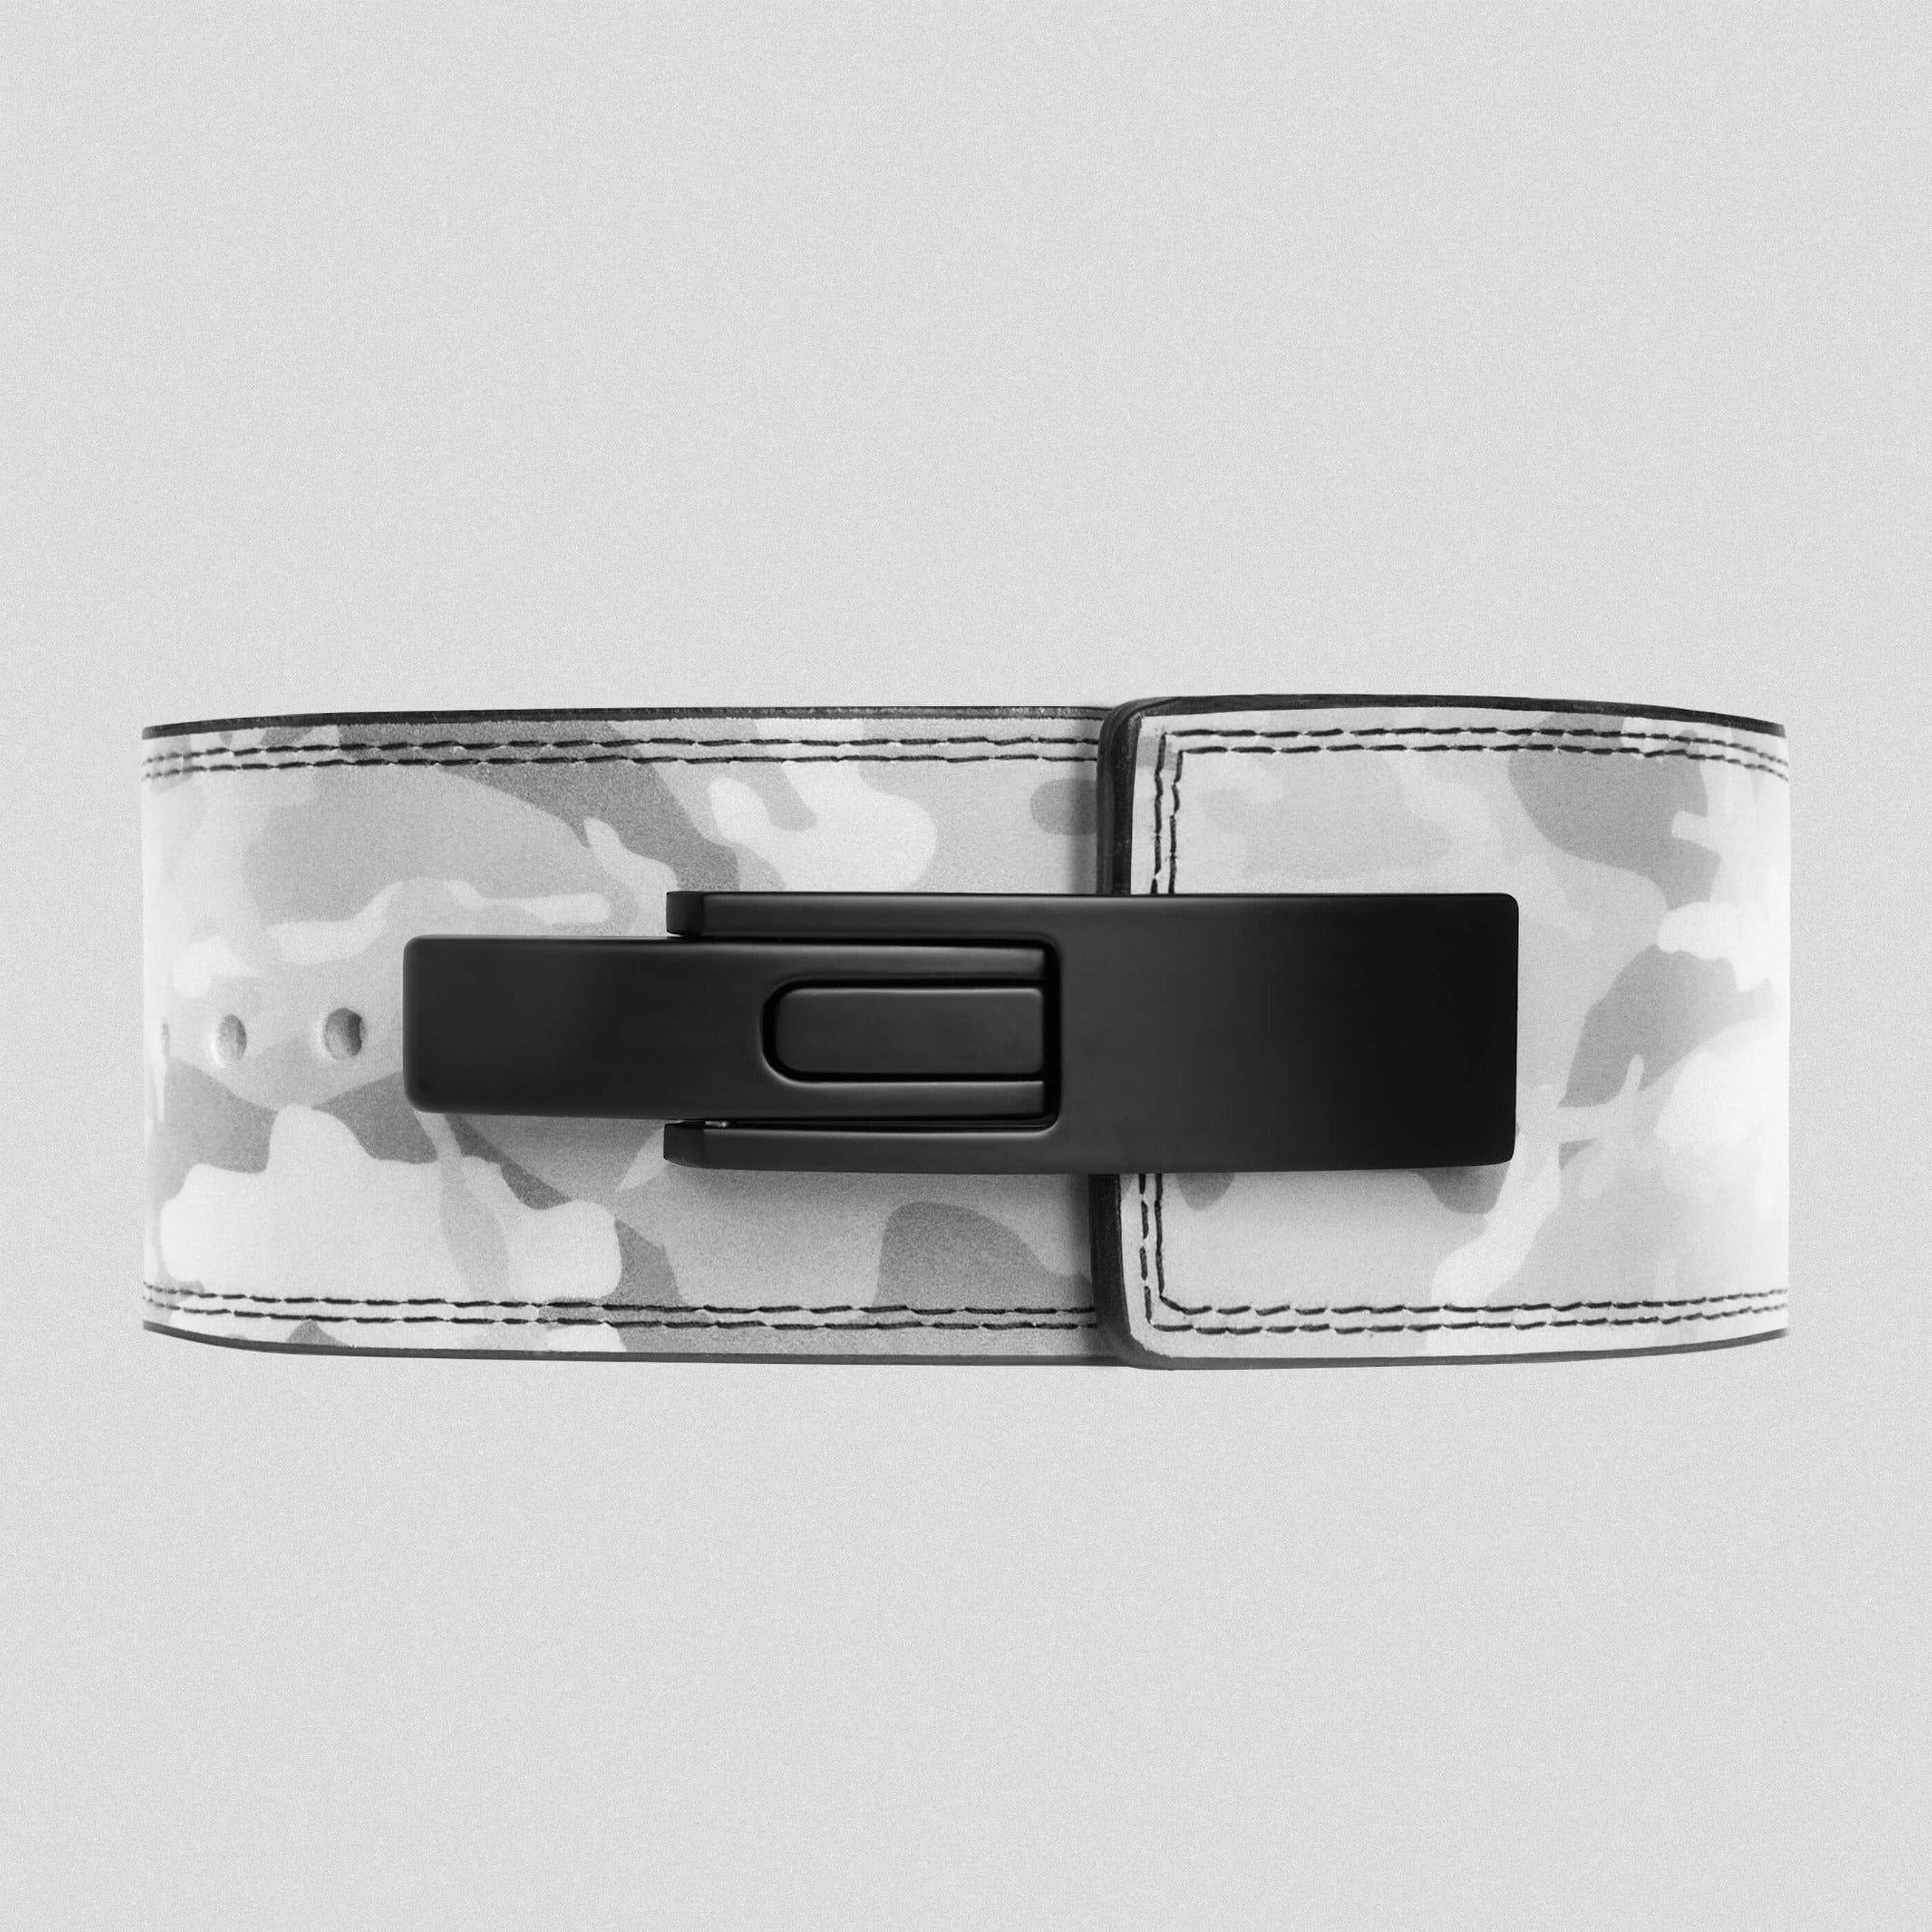 10mm belt white camo front